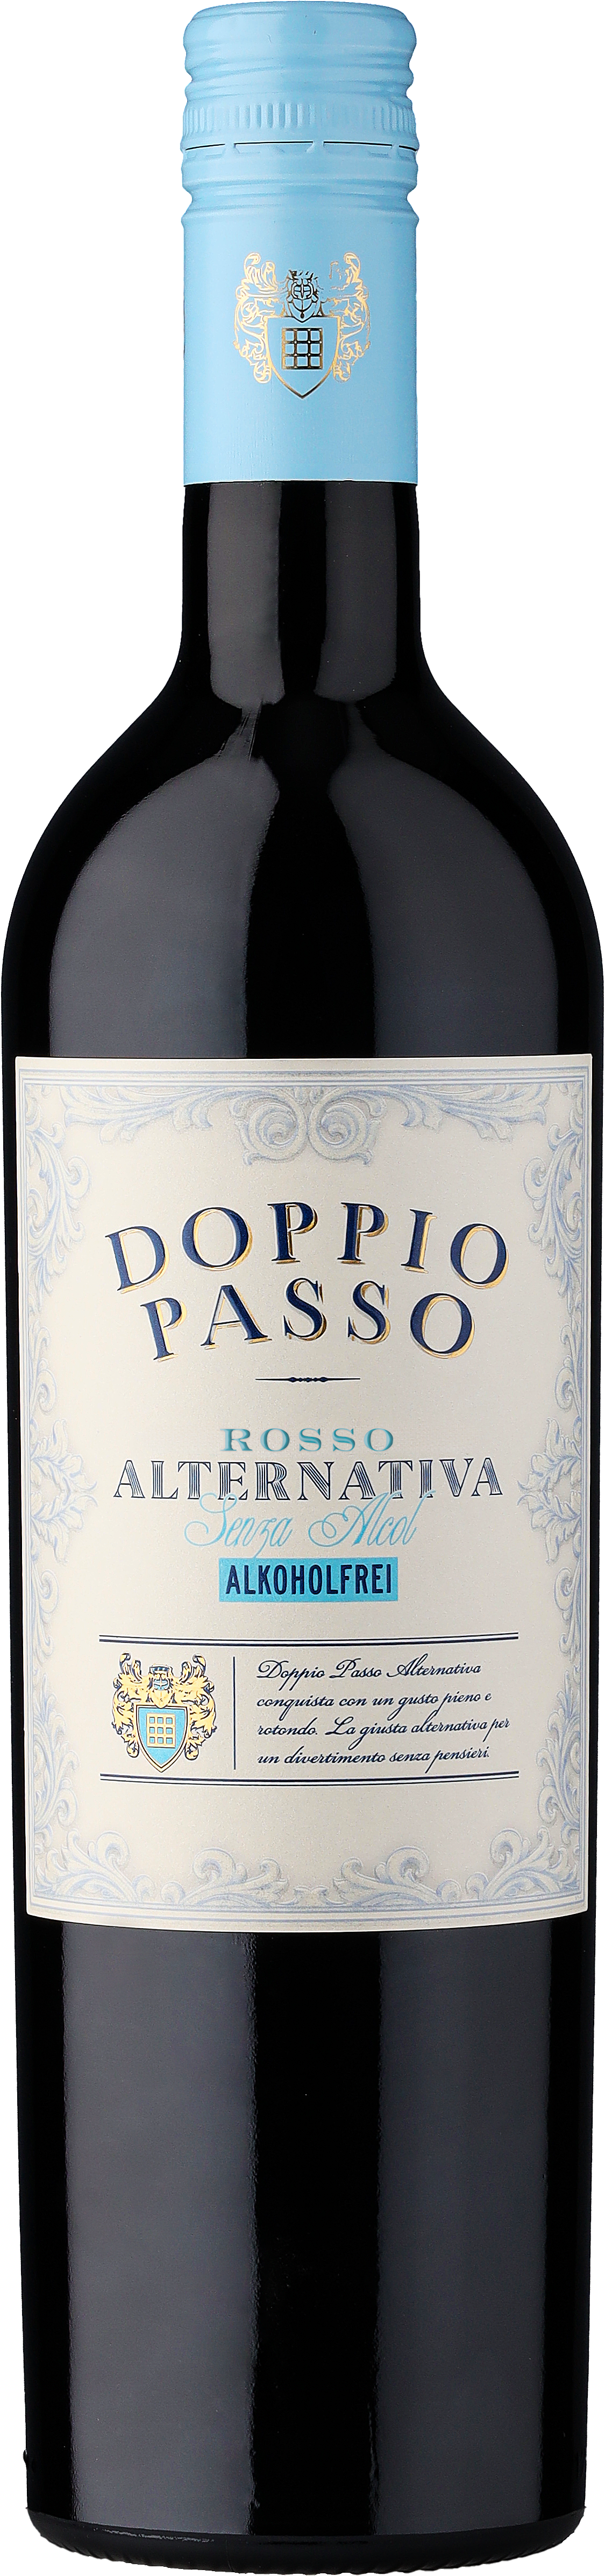 Doppio Passo Primitivo »Alternativa« alkoholfrei von Botter Casa Vinicola S.P.A.